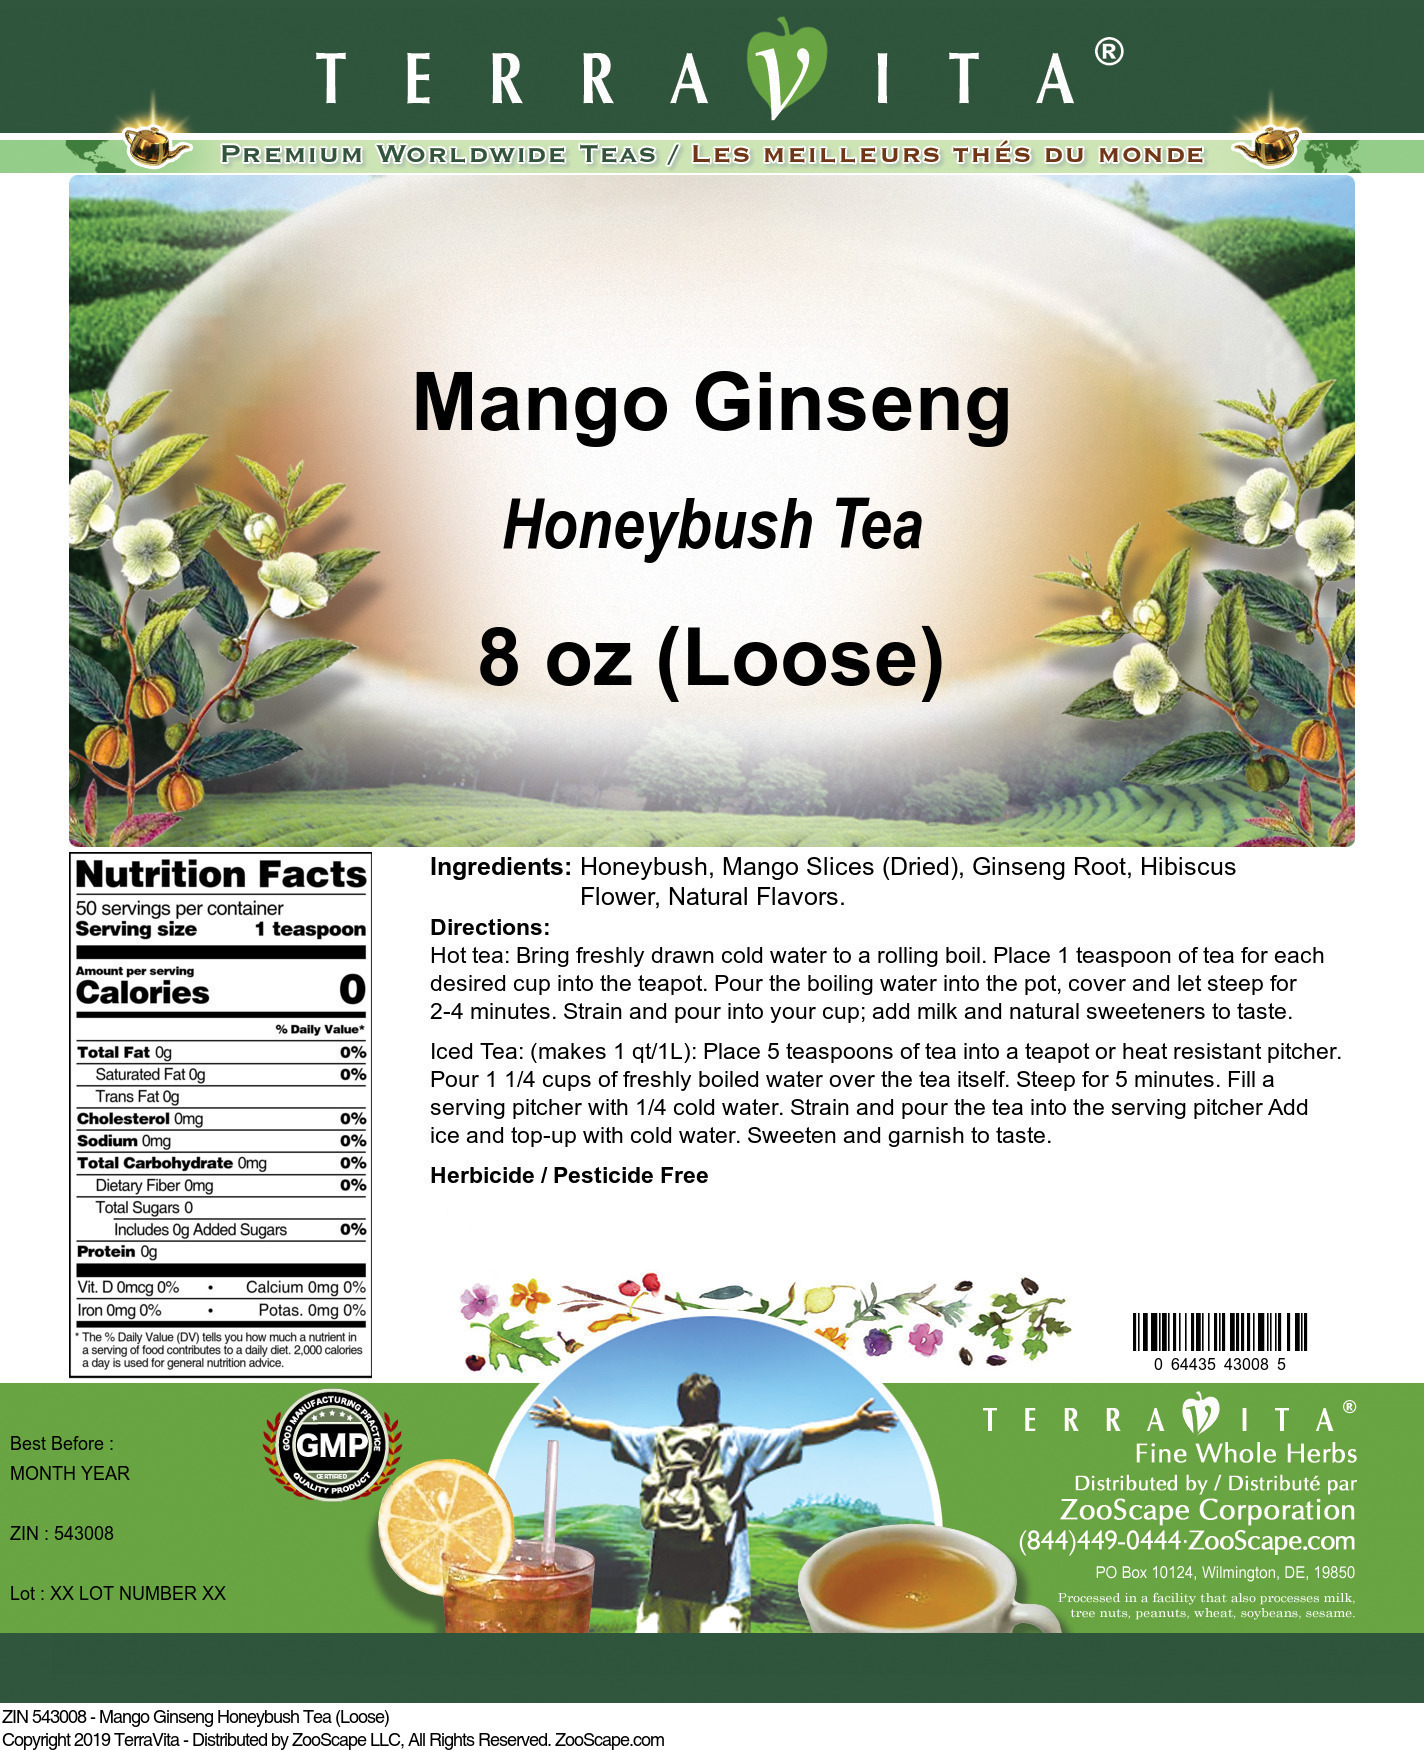 Mango Ginseng Honeybush Tea (Loose) - Label